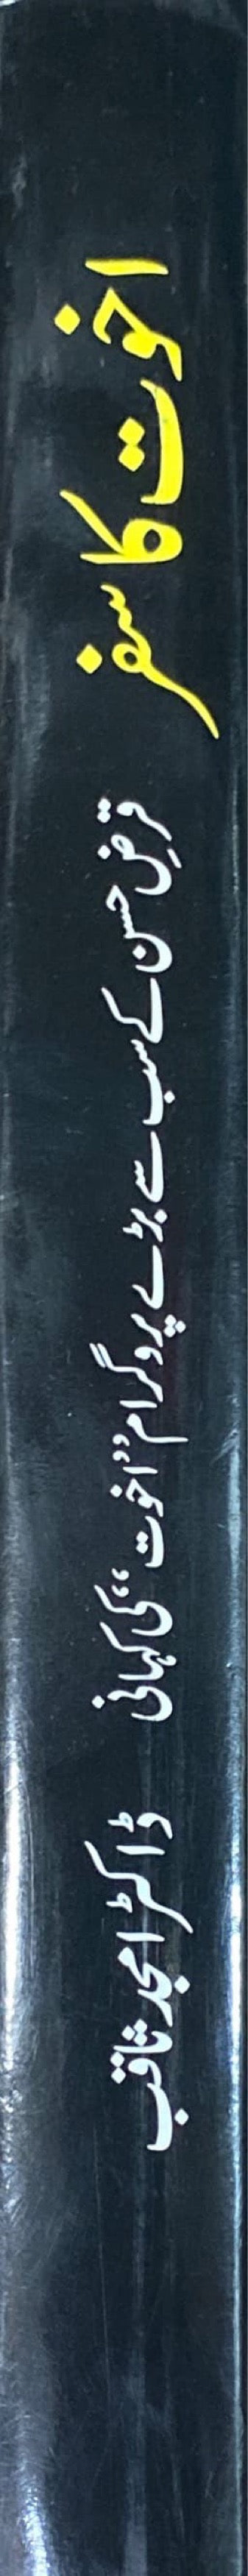 Urdu Ukhuwat Ka Safar